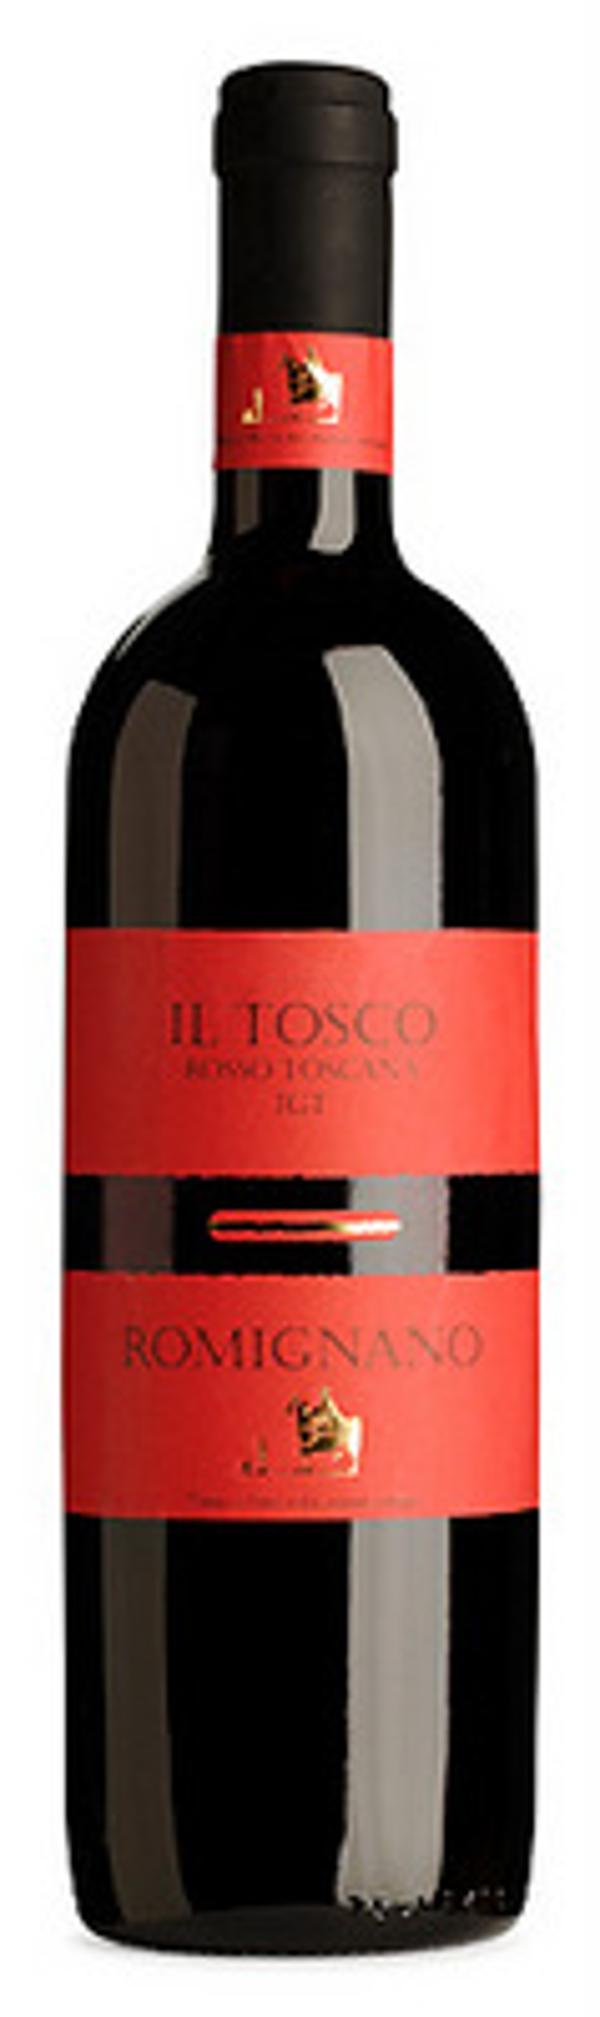 Produktfoto zu Il Tosco Romignano rot trocken, 0,75l